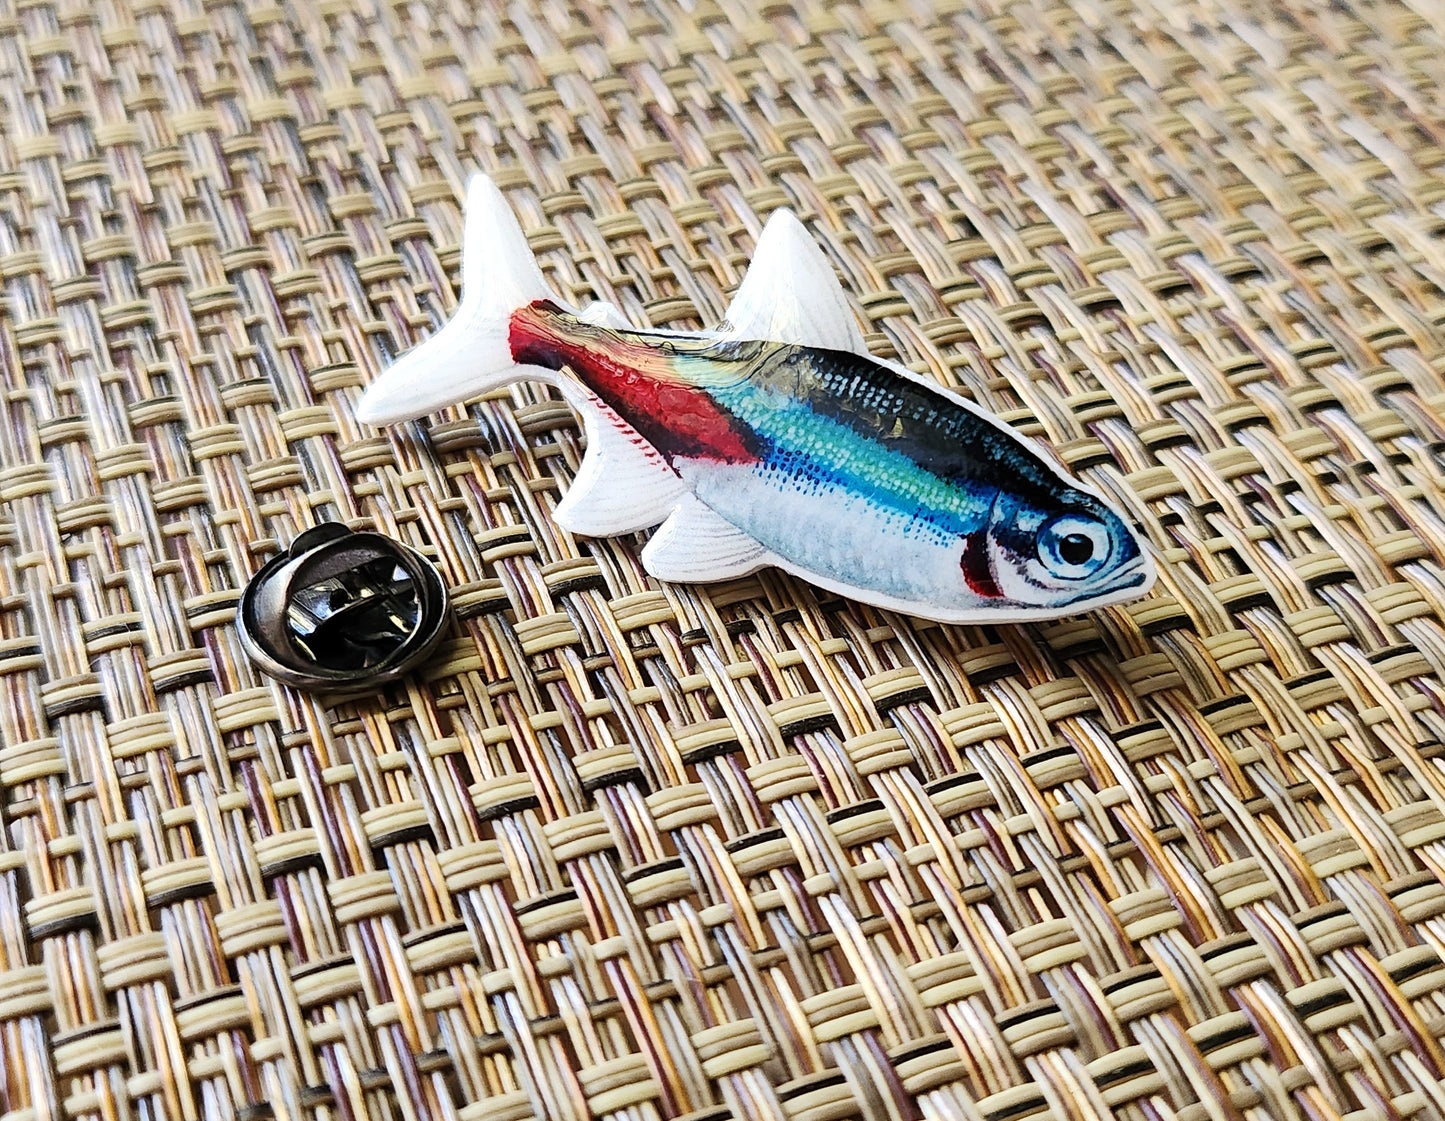 Neon Tetra - Resin Coated Polystyrene Pin - 100% Handmade Fish Pin